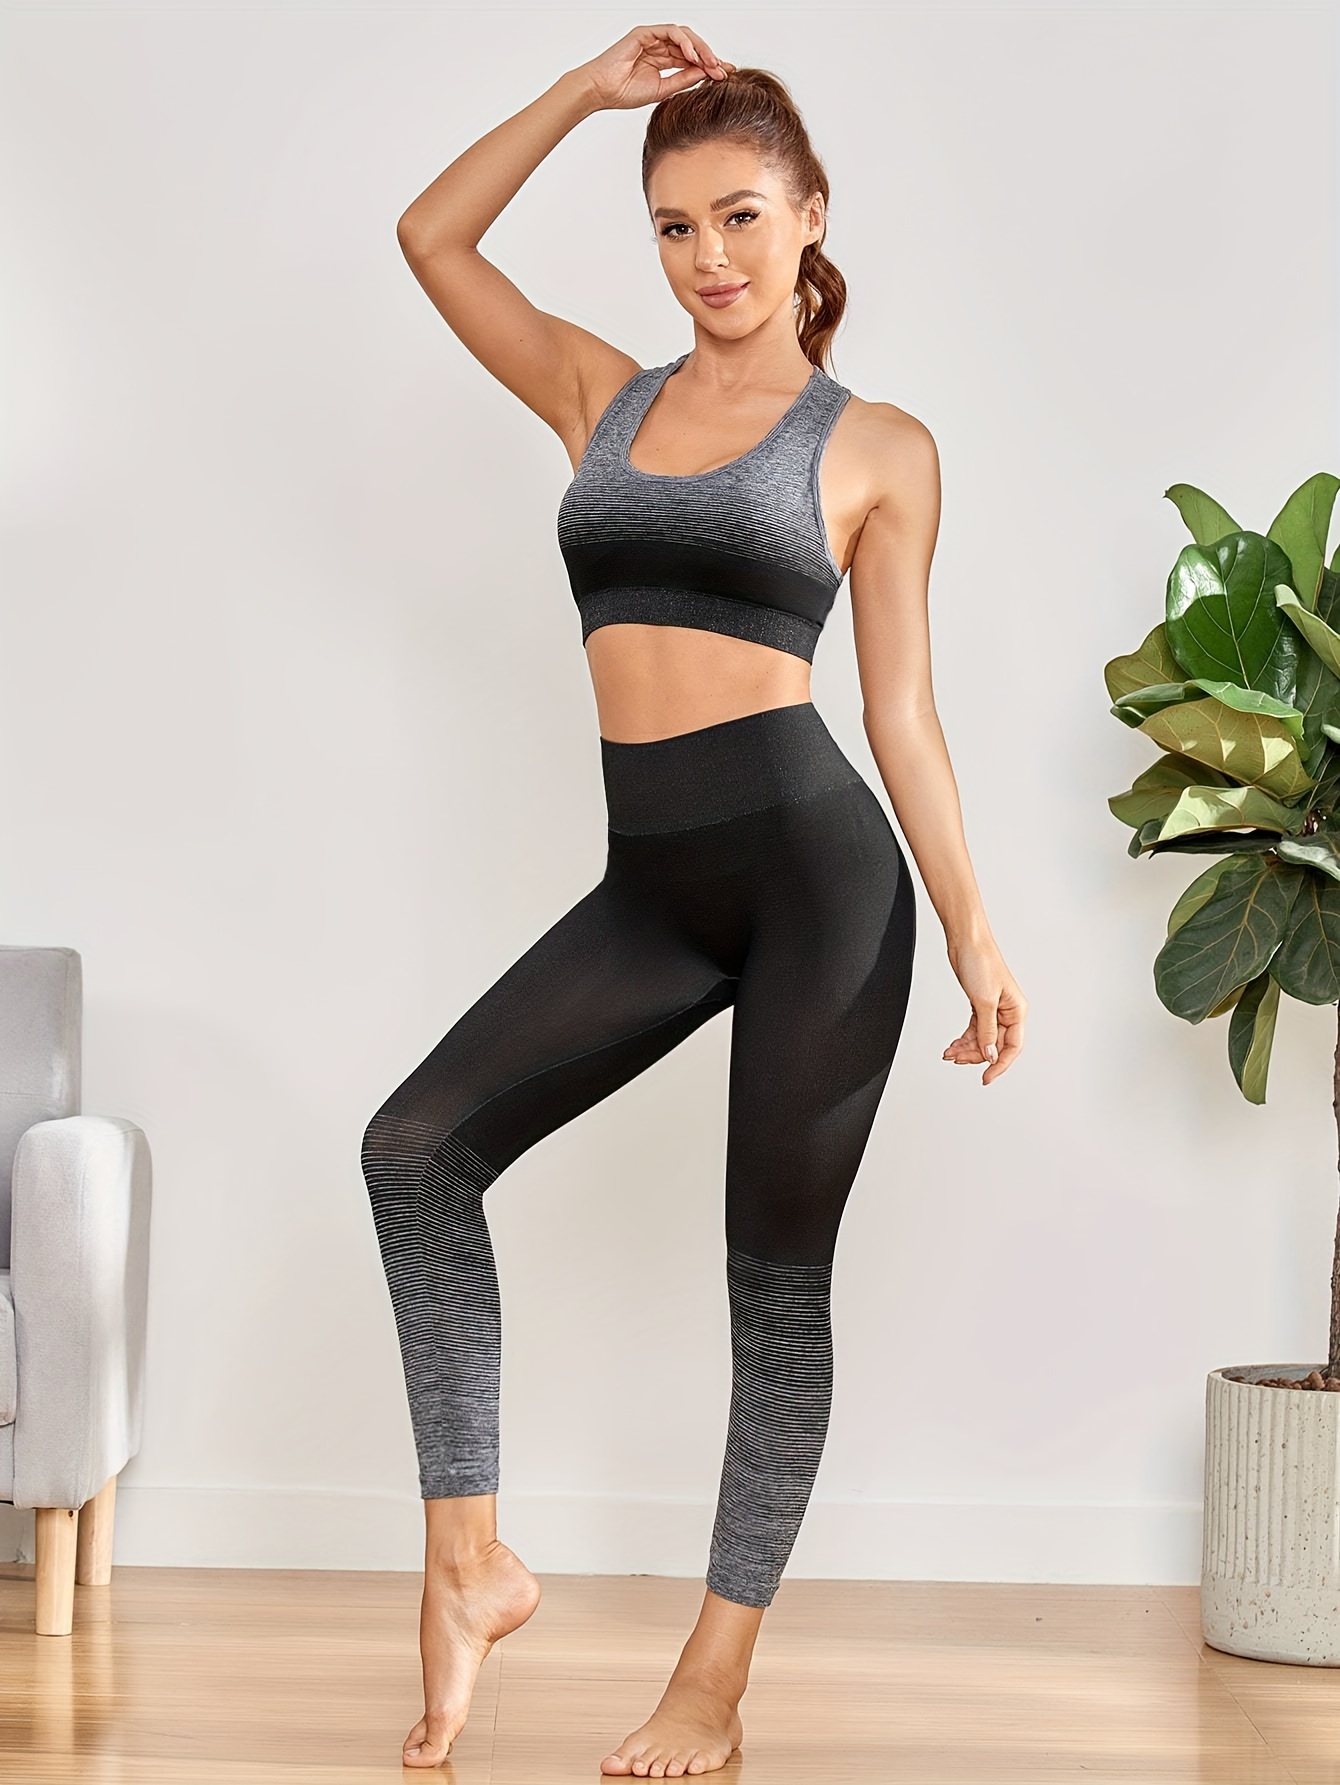 2pcs Fitness Gym Set Sport Bra Top And Skinny Yoga Pants Leggings Wear For  Women